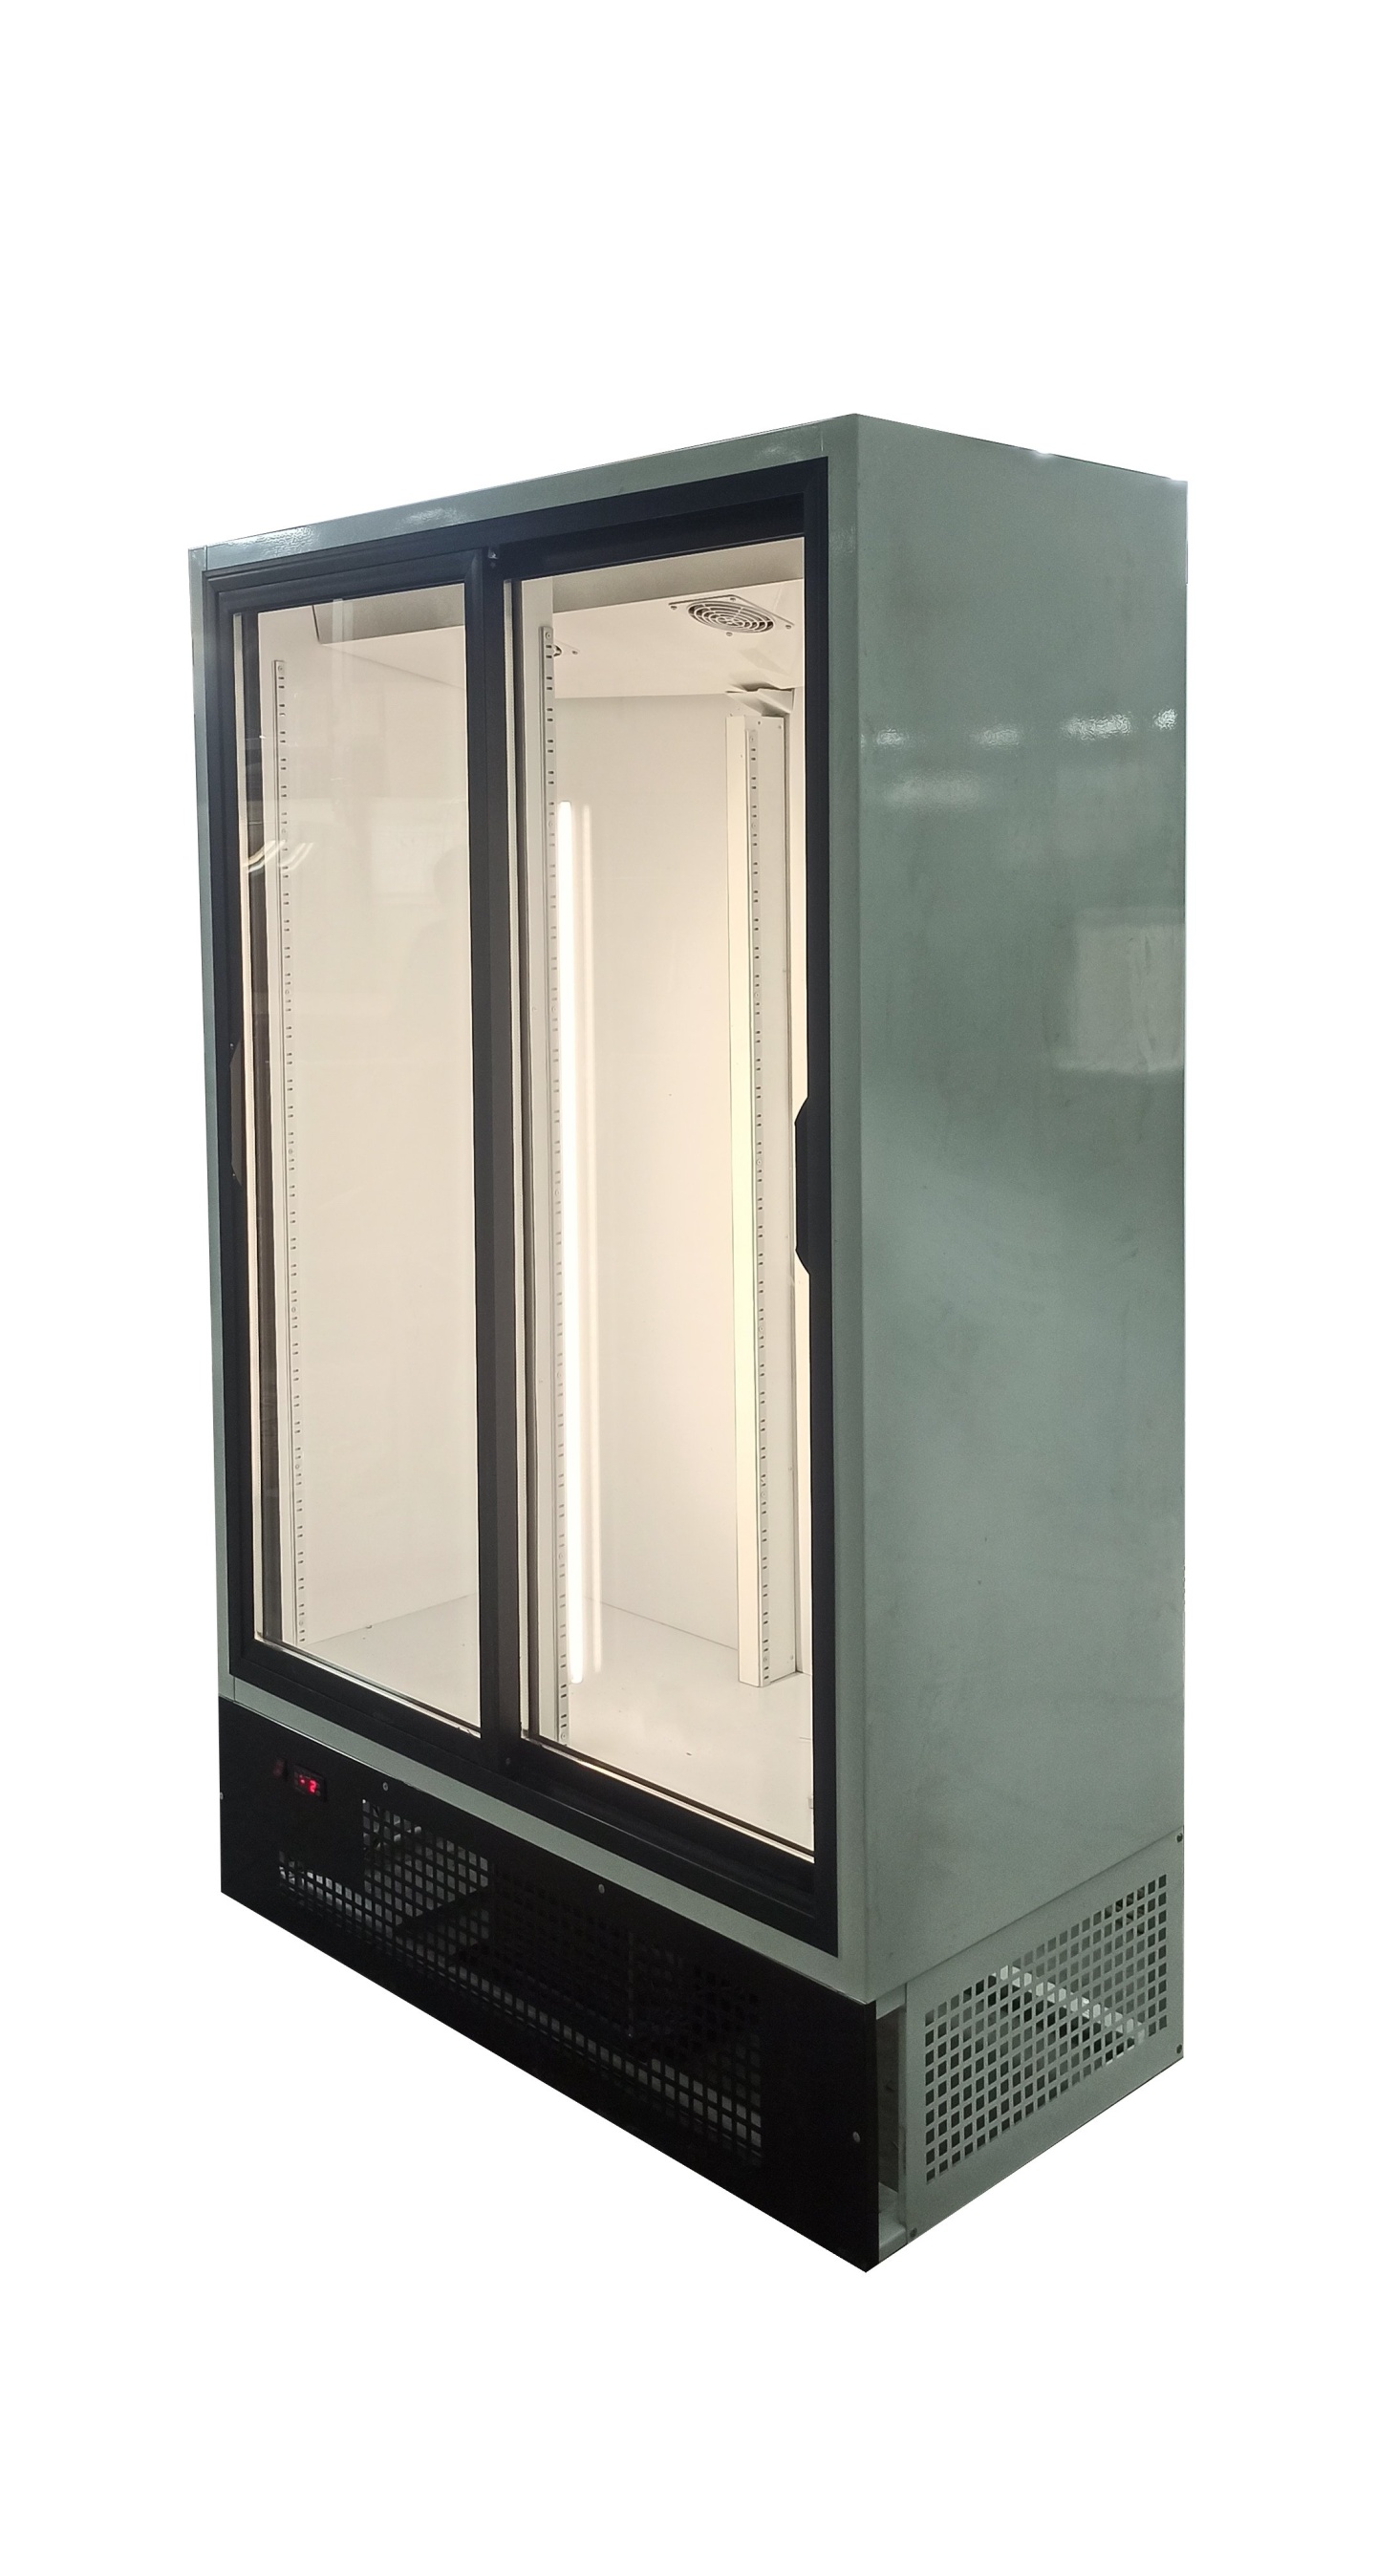 Шкаф купе Ангара-4. Ту 5151 001 83053360-2016 Ангара холодильник шкаф. Дверь ПВХ распашная 1500*3000 без стекла. Витрина 24